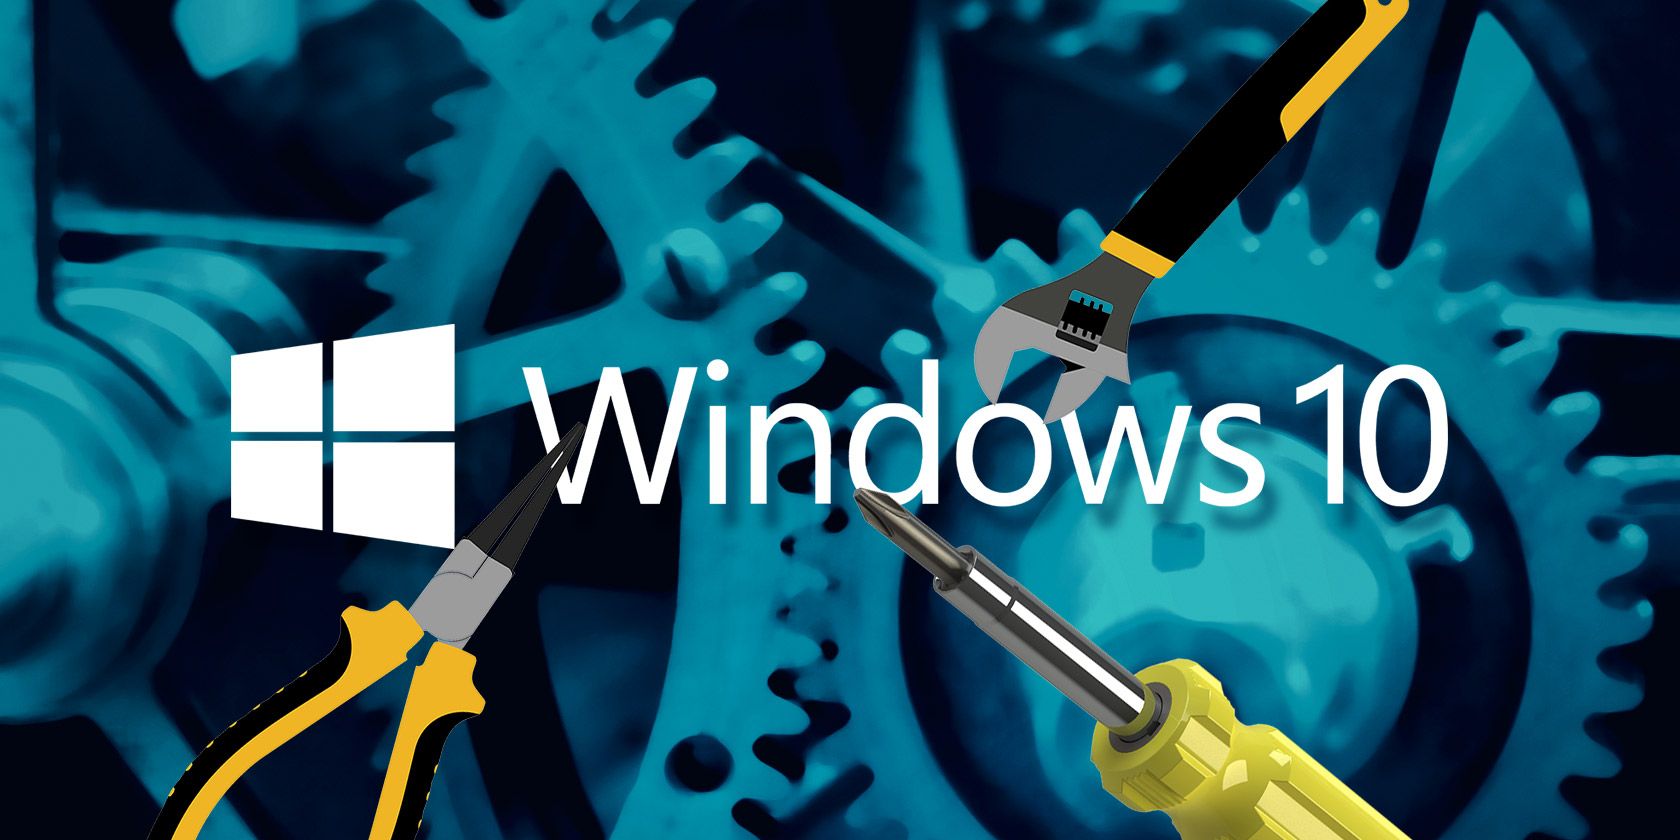 troubleshooting tools windows 10